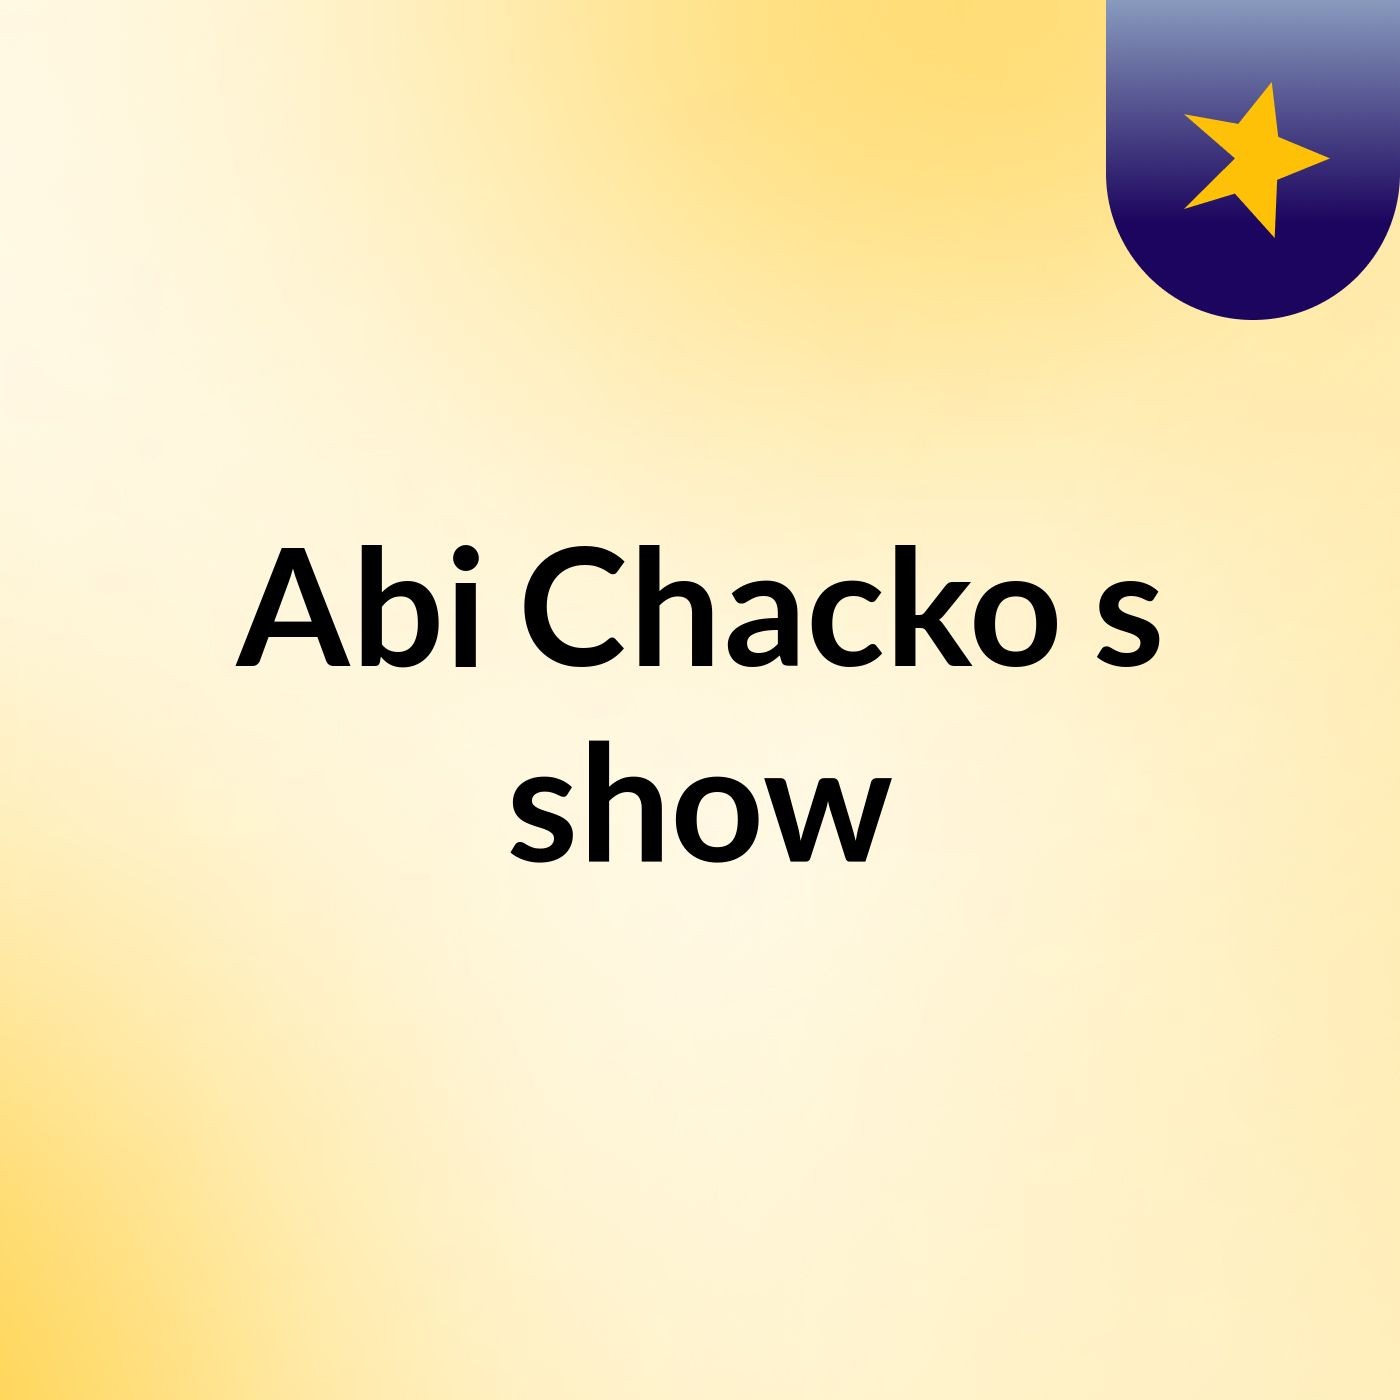 Abi Chacko's show